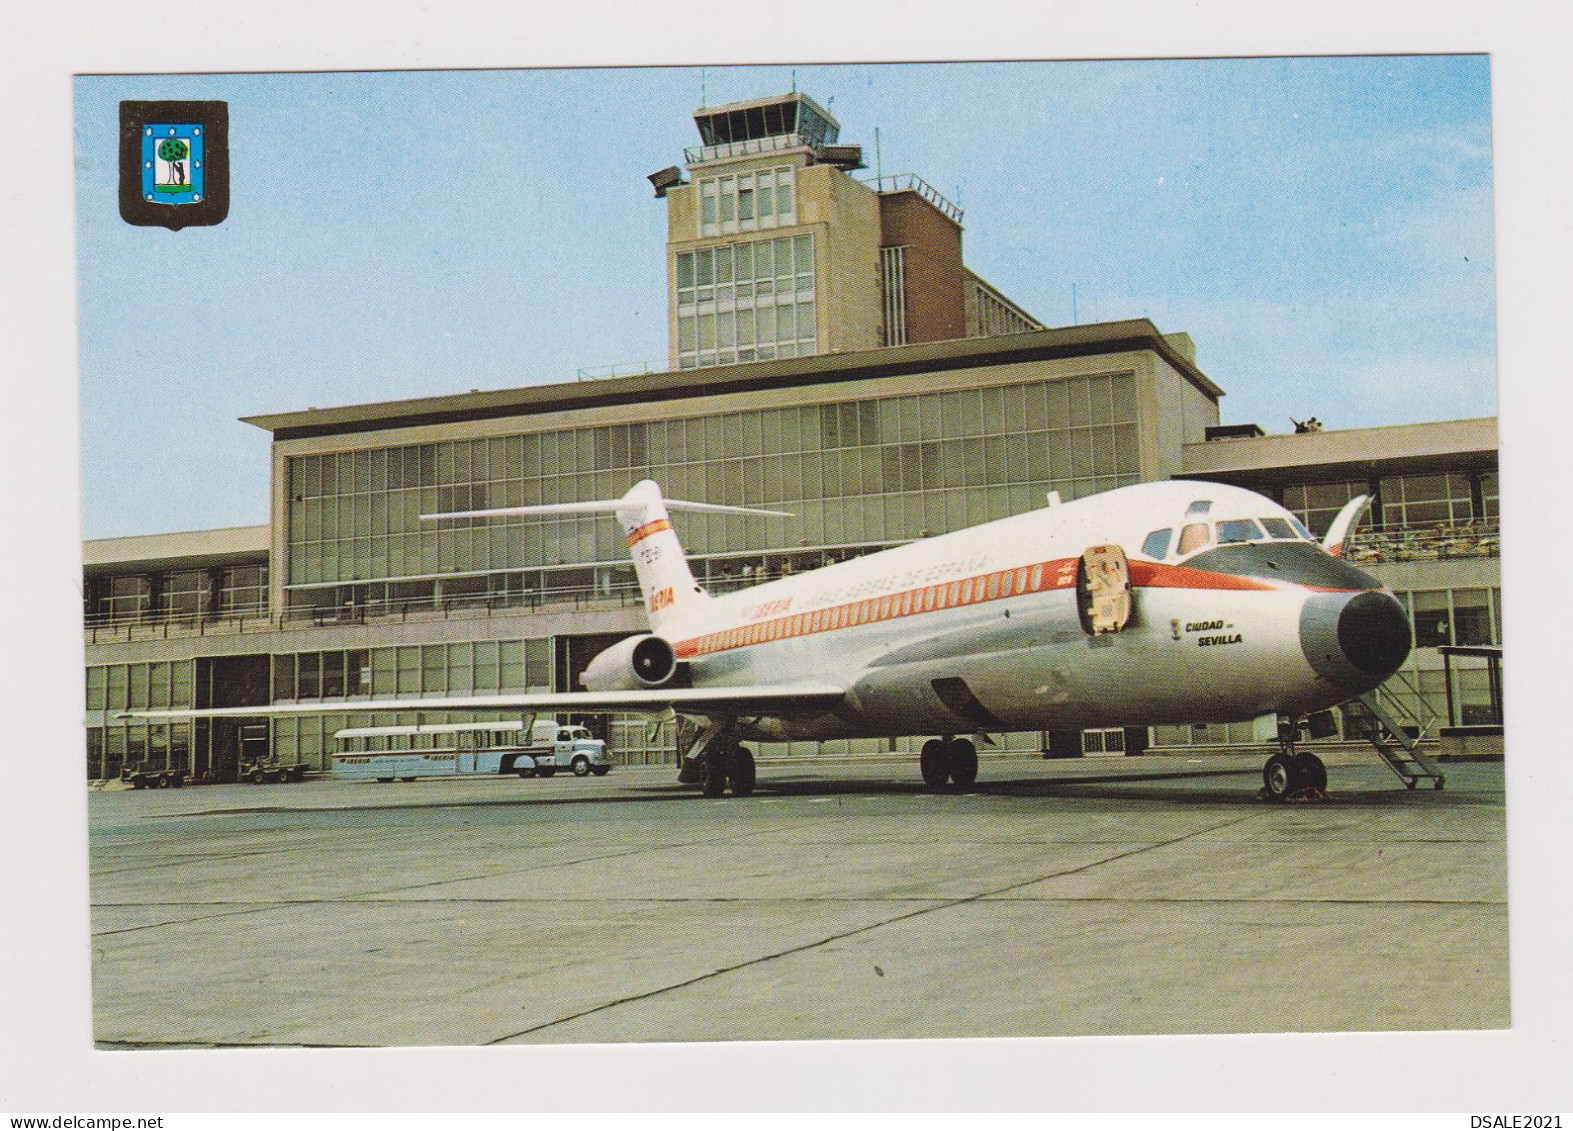 Spain MADRID "Barajas" Airport With IBERIA Carrier DC-9 Airplane, Jet, View Vintage Photo Postcard RPPc AK (734) - 1946-....: Era Moderna